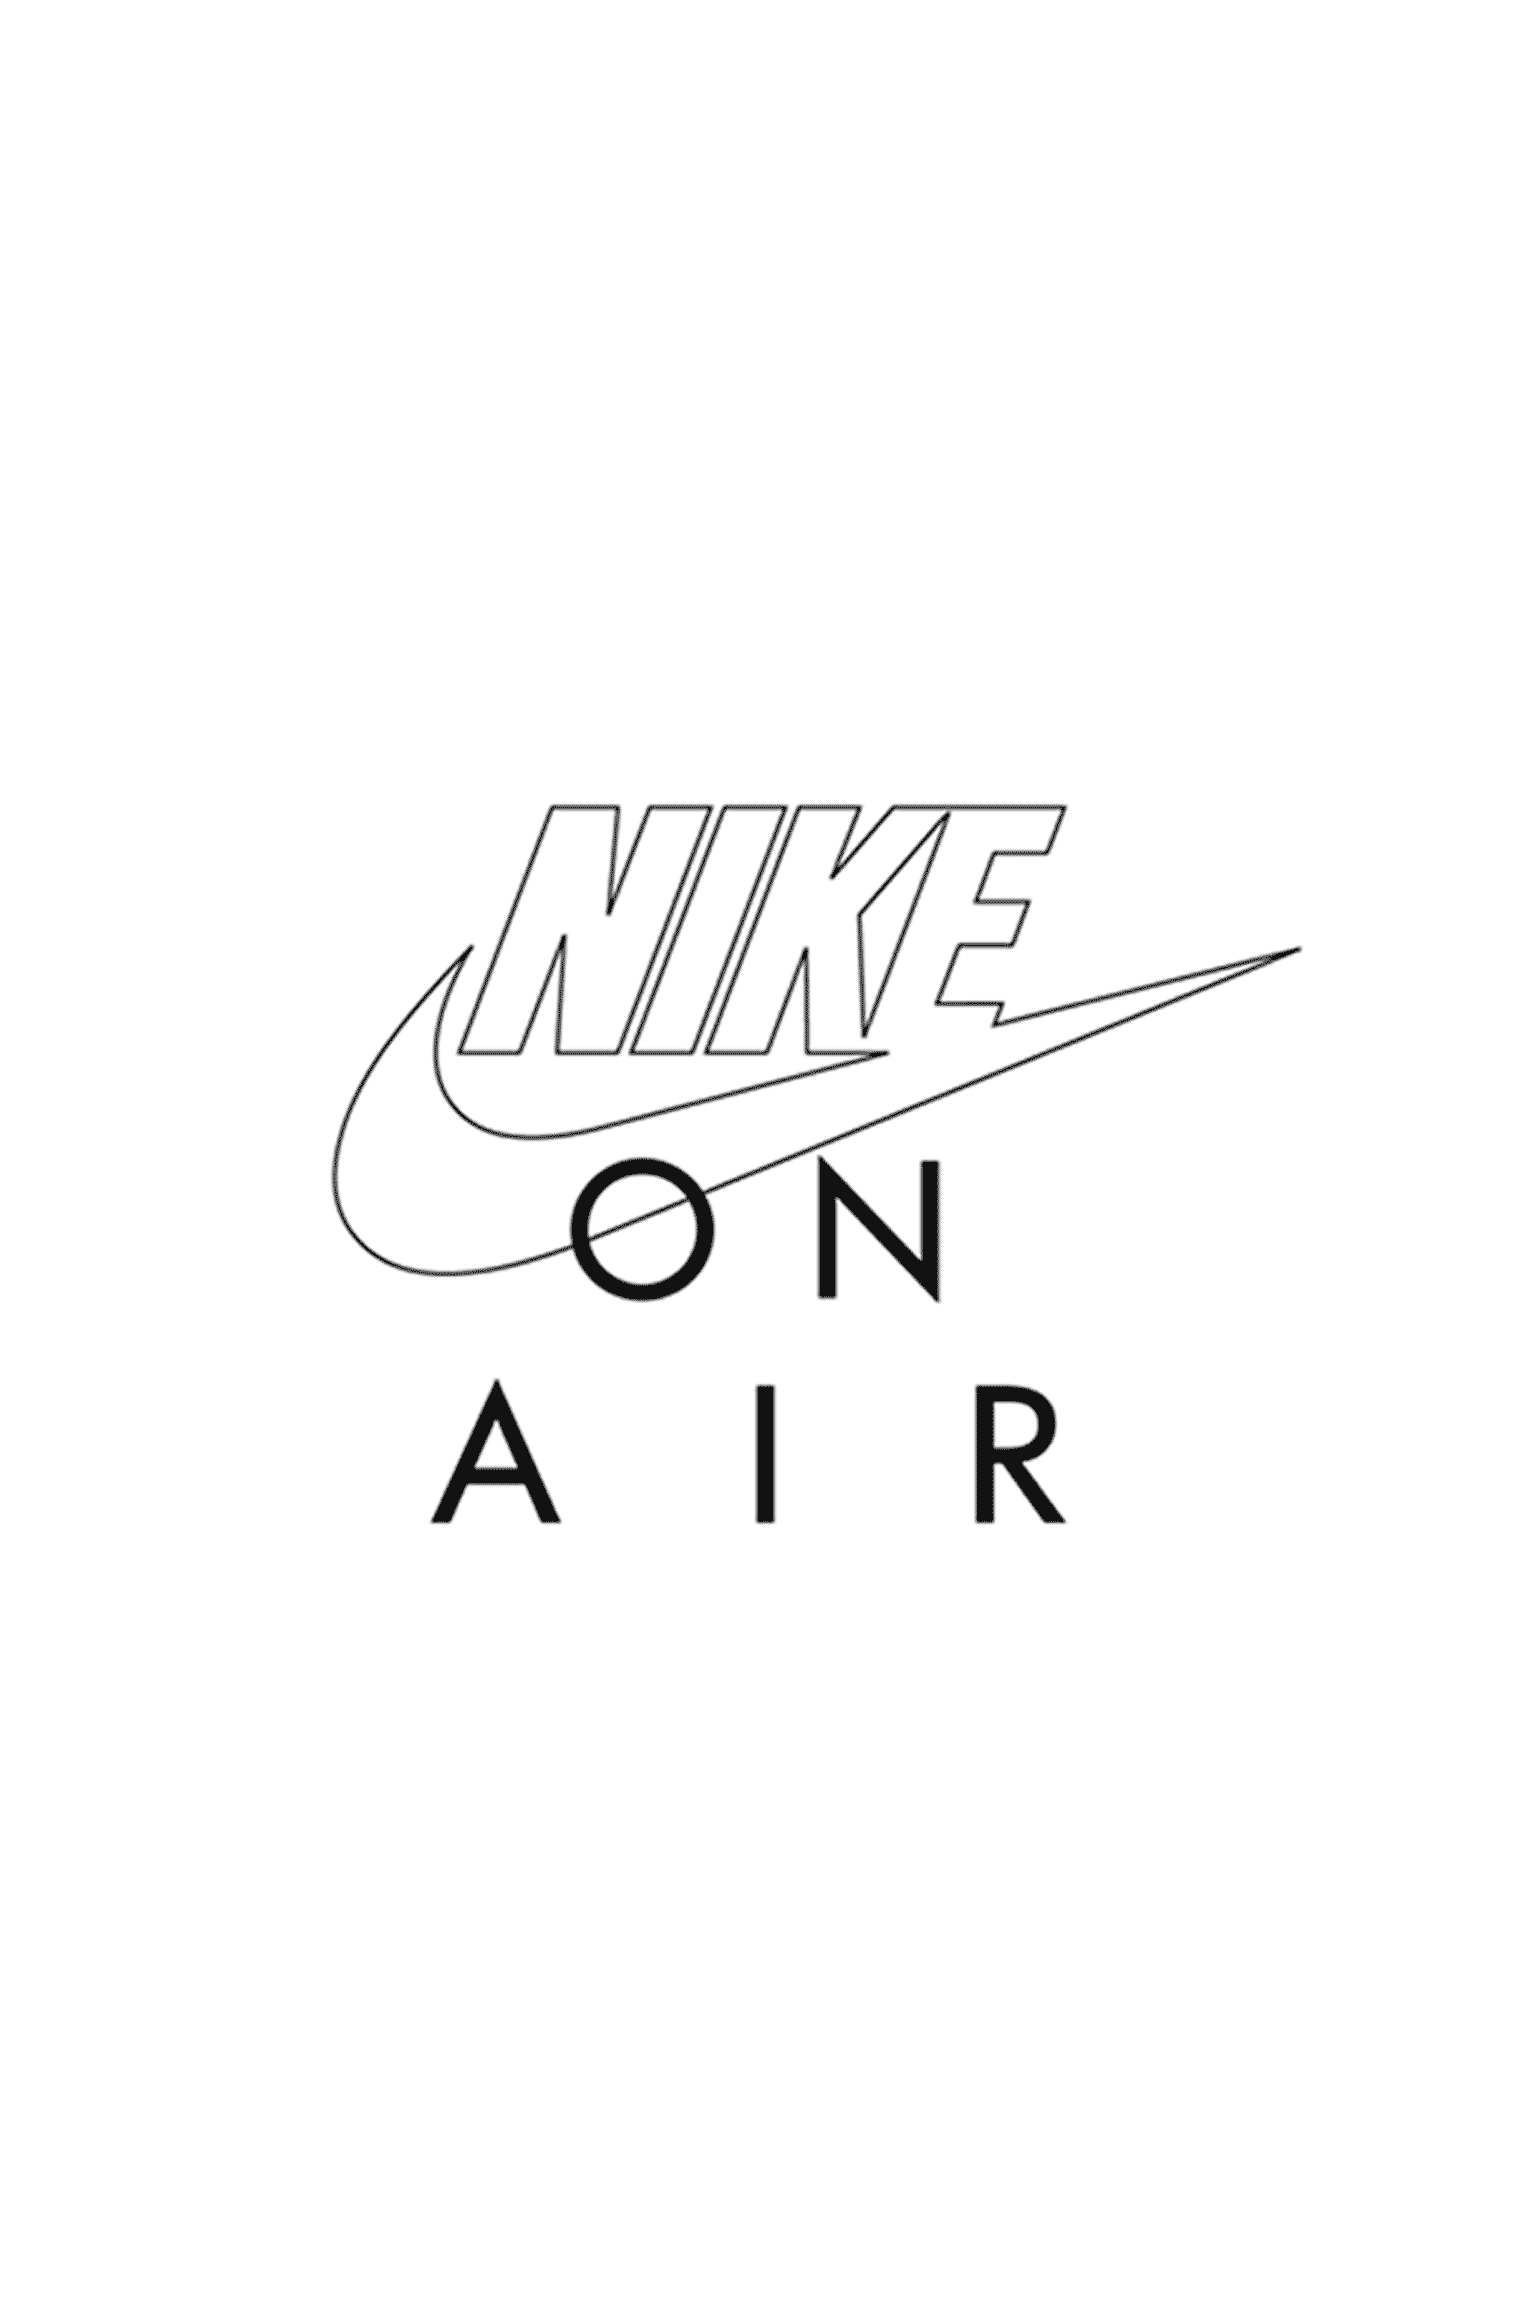 Nike On Air: Bald erhältlich. Nike SNKRS DE